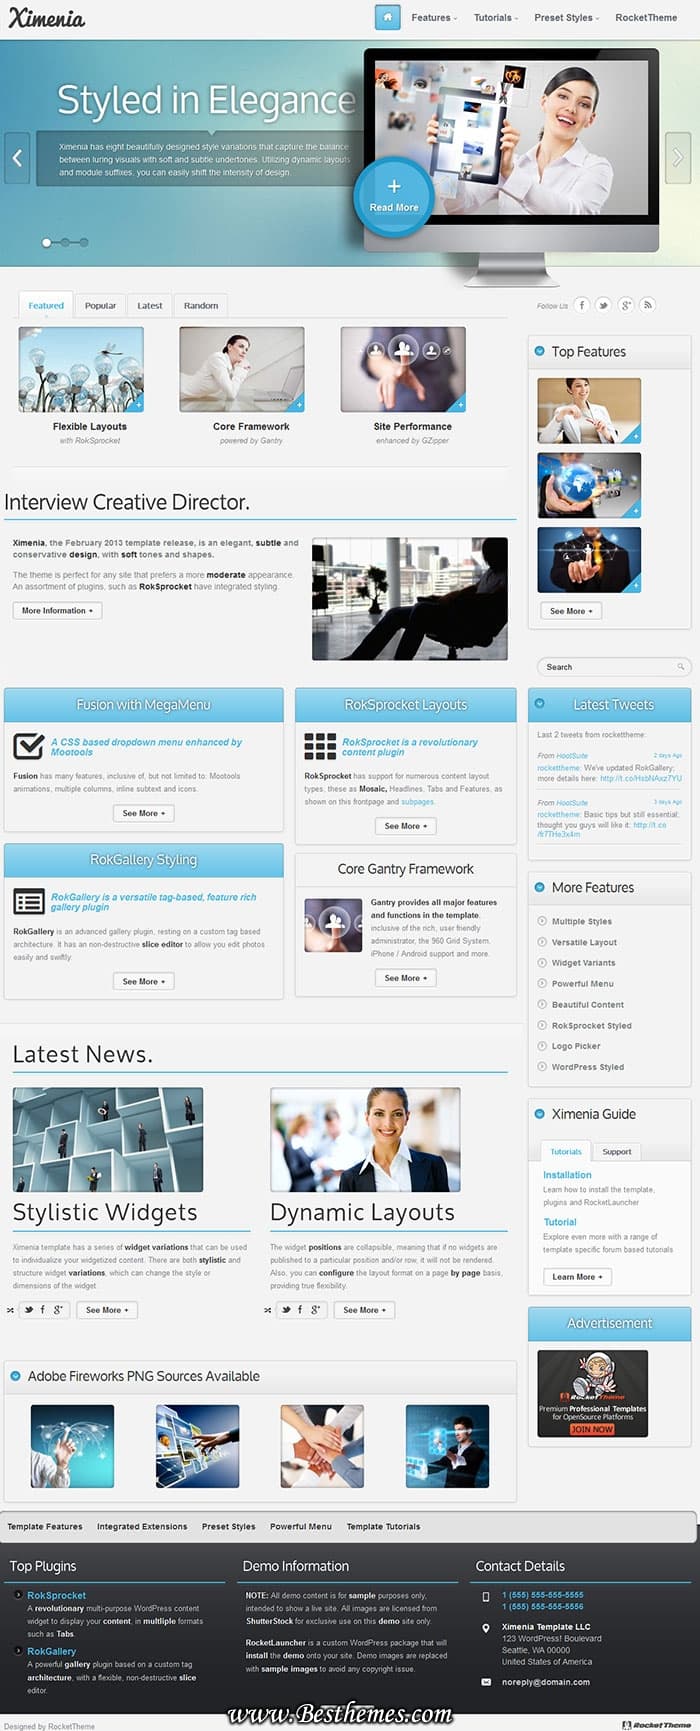 Ximenia WordPress Theme From Rocket-Theme, A Responsive Business WP Theme, Ximenia WordPress Theme, Best Professional Business Wp Theme, Best Business WordPress Theme